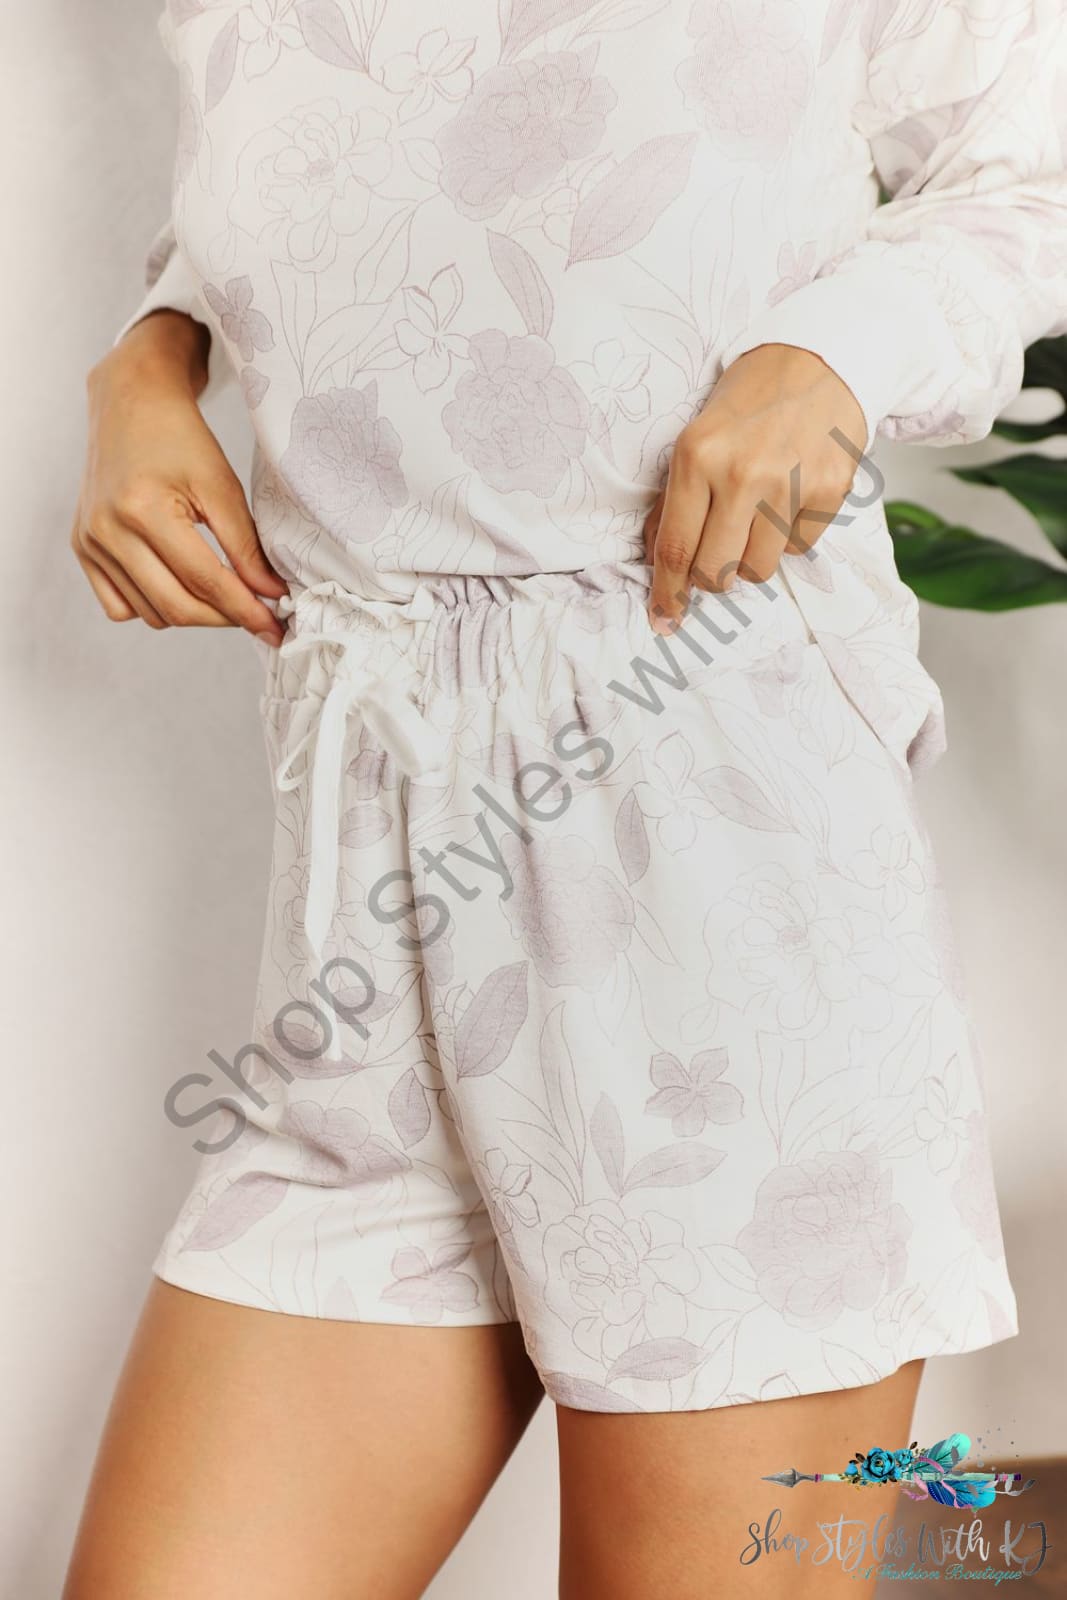 Double Take Floral Long Sleeve Top And Shorts Loungewear Set Sleepwear &